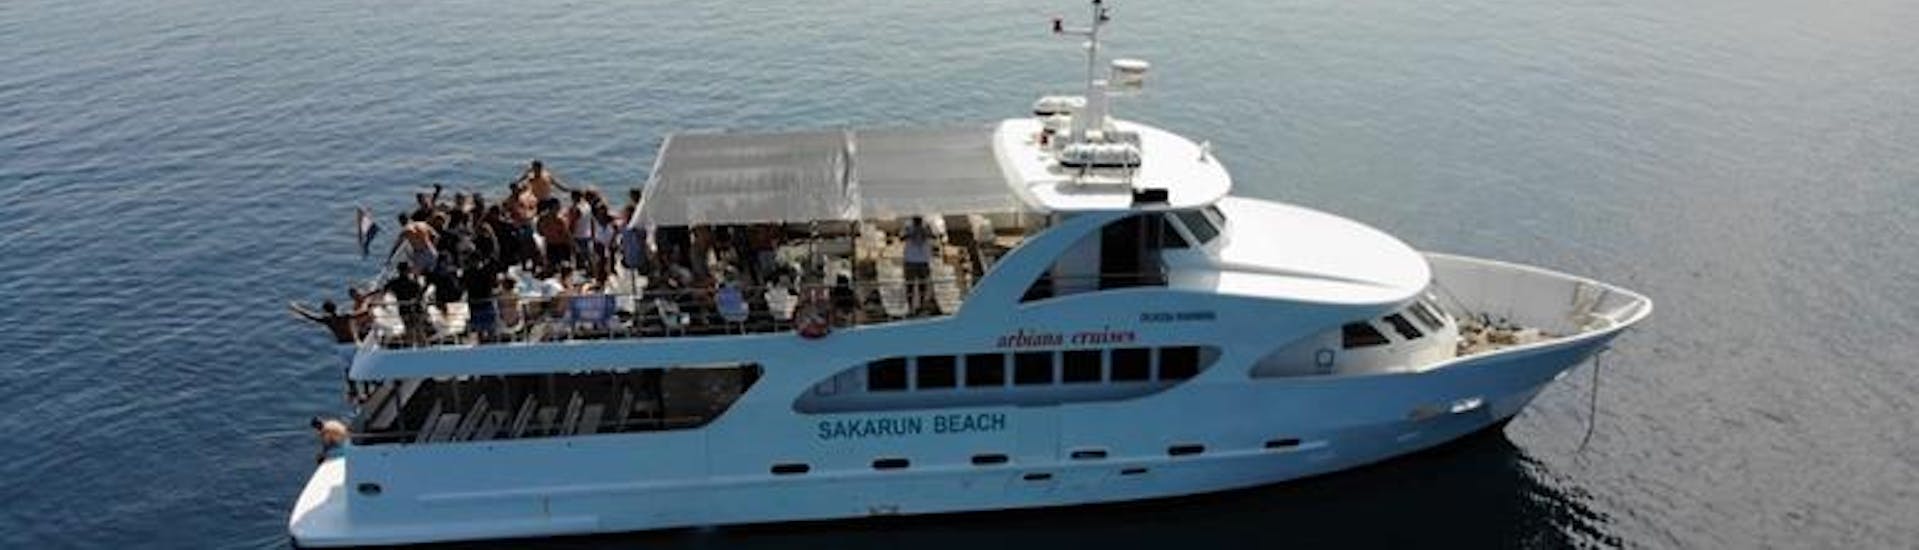 Bootstour zur Insel Dugi Otok inkl. Strand Sakarun ab Zadar.